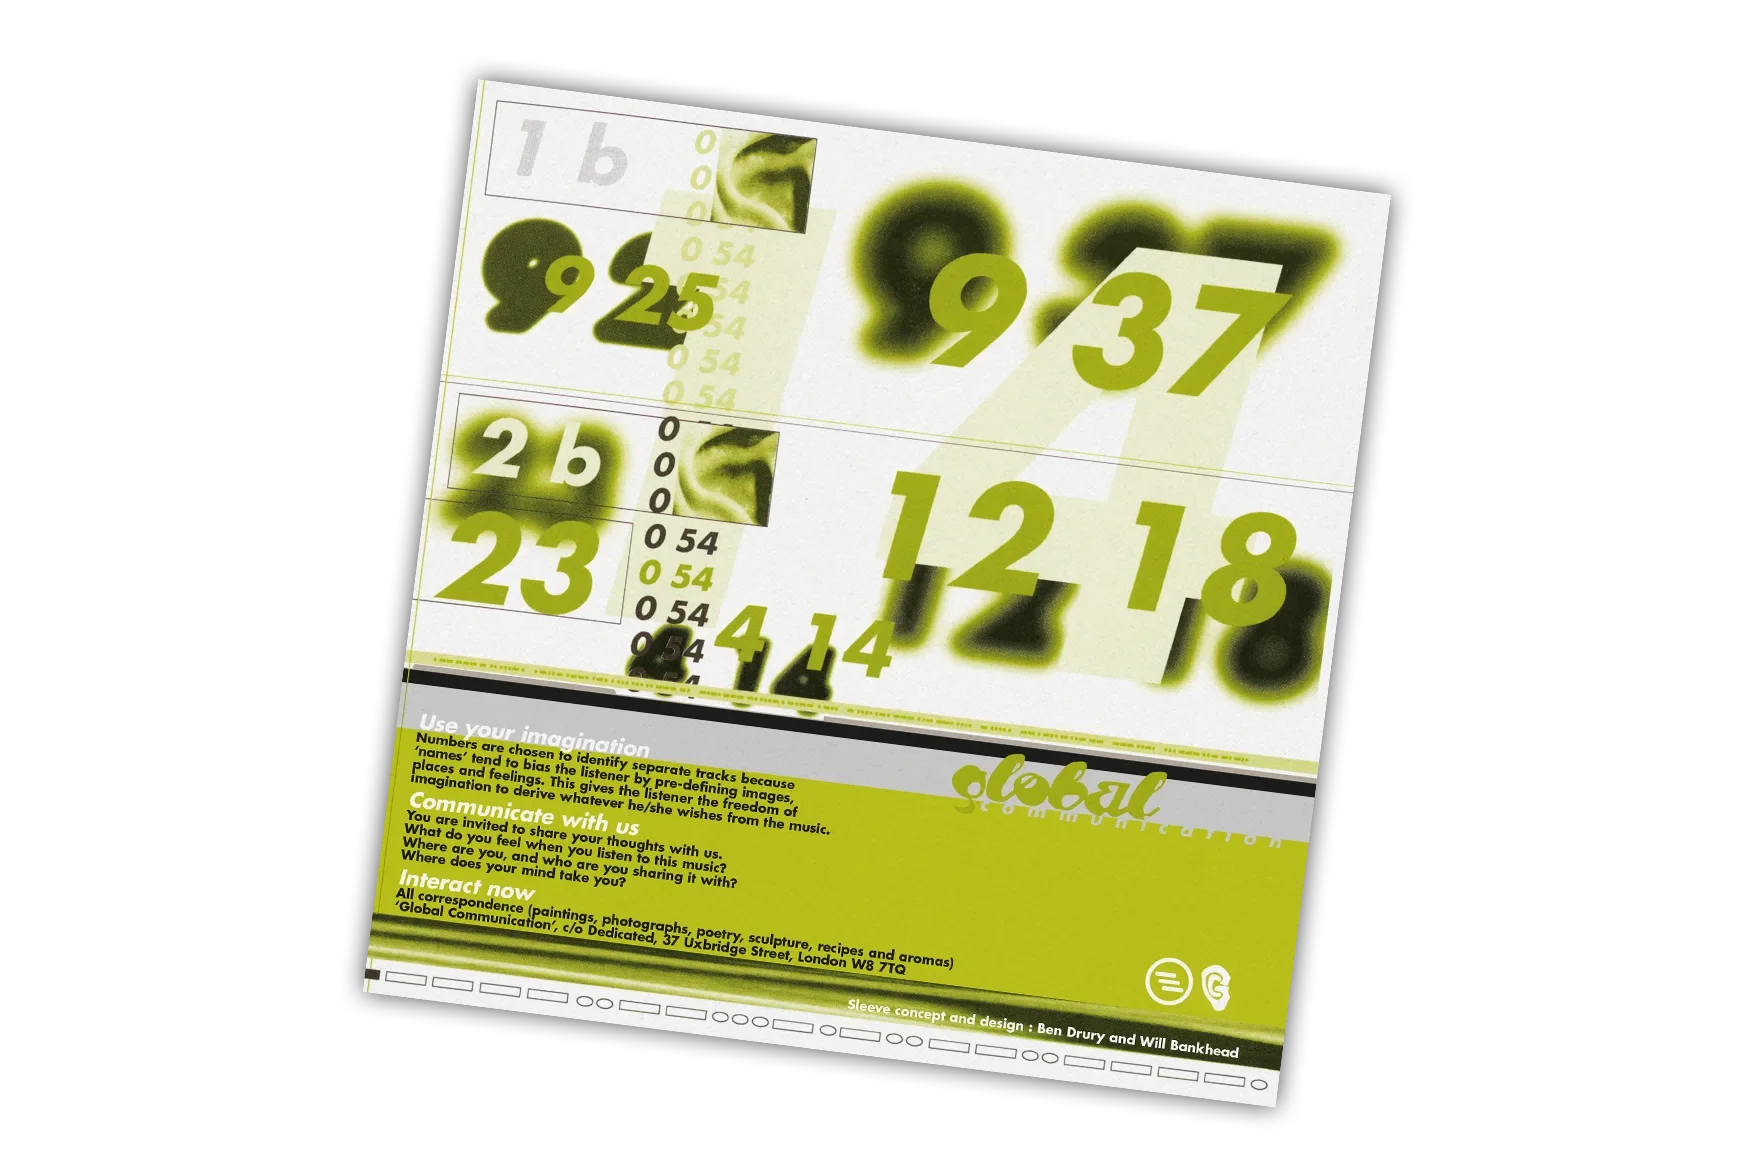 GLOBAL COMMUNICATION - 76:14 (30th Anniversary Edition) - 2LP - 180g Crystal Clear & Transparent Green Marbled Vinyl [JUN 28]